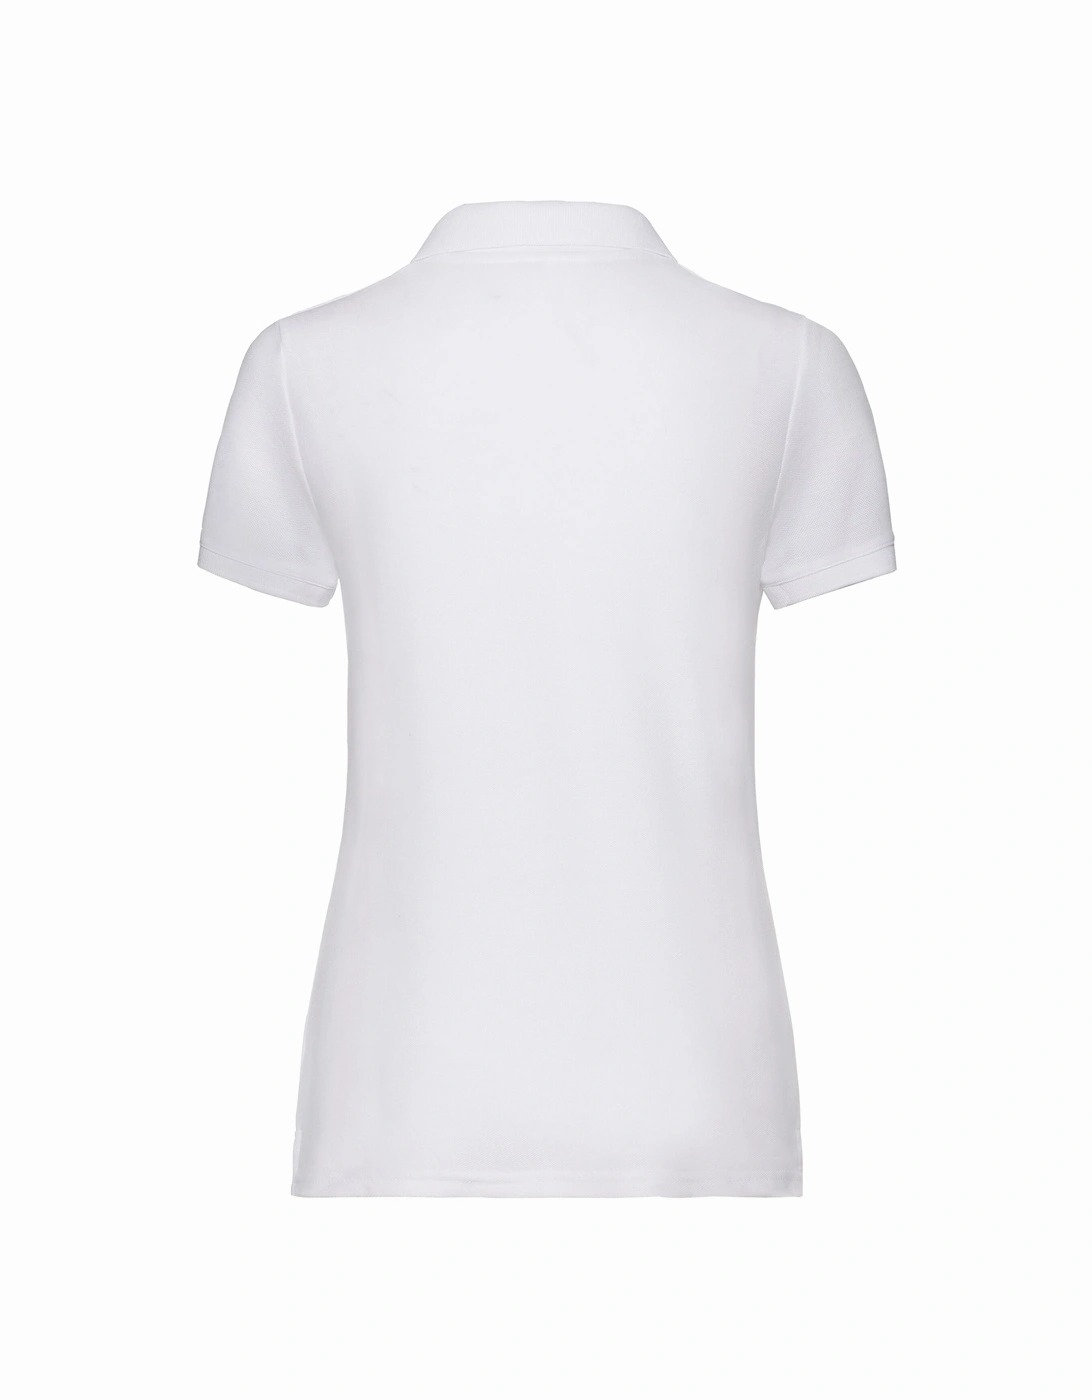 Womens/Ladies Lady Fit 65/35 Polo Shirt